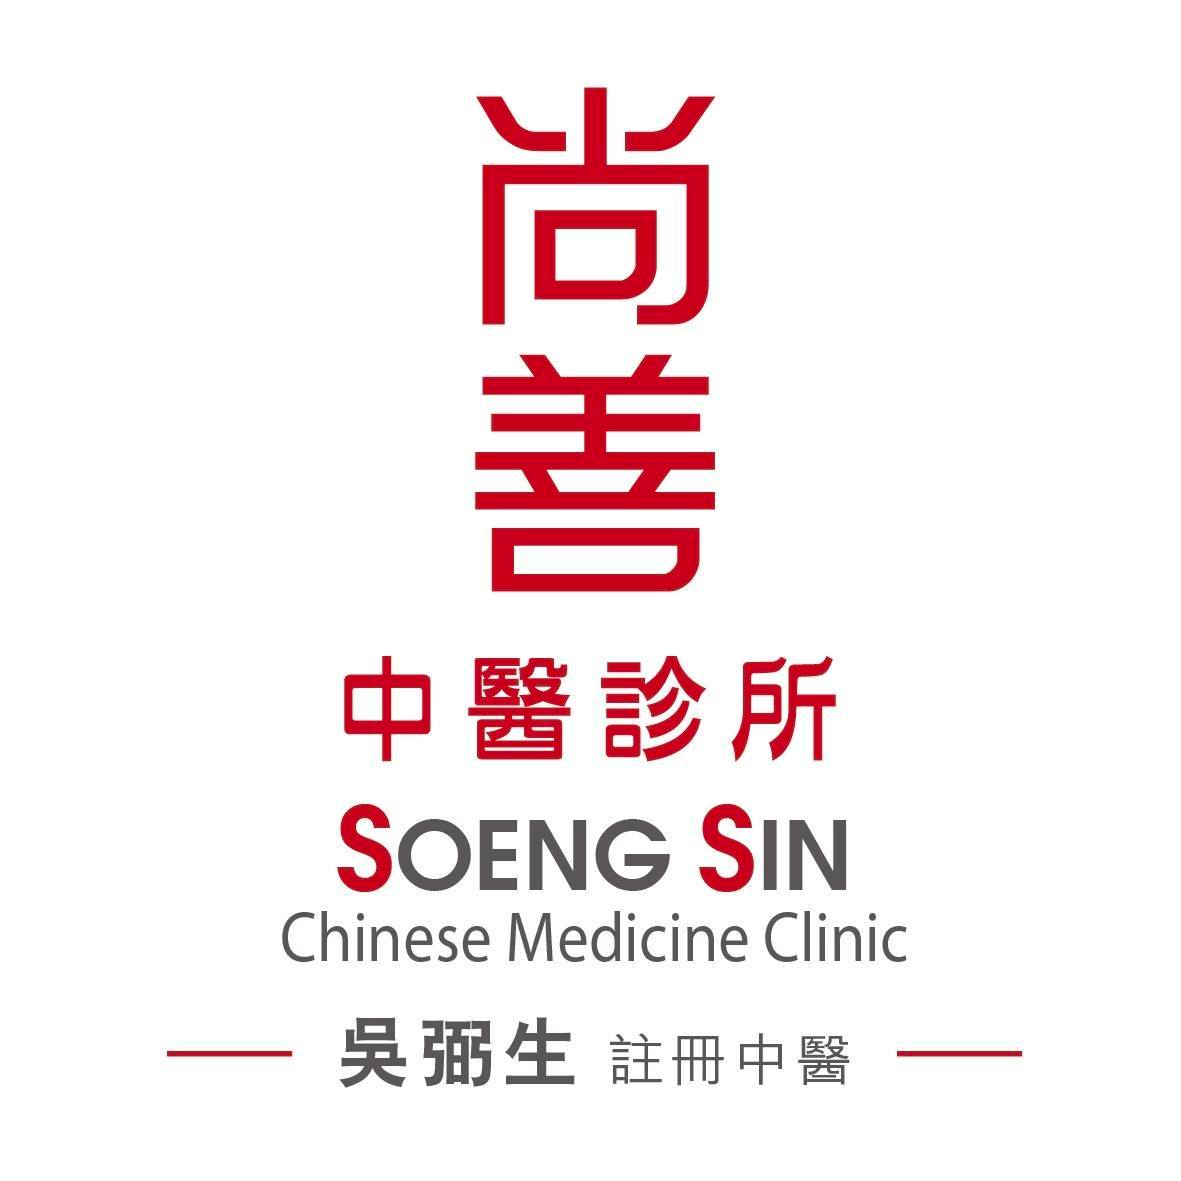 Soeng Sin Chinese Medicine Clinic